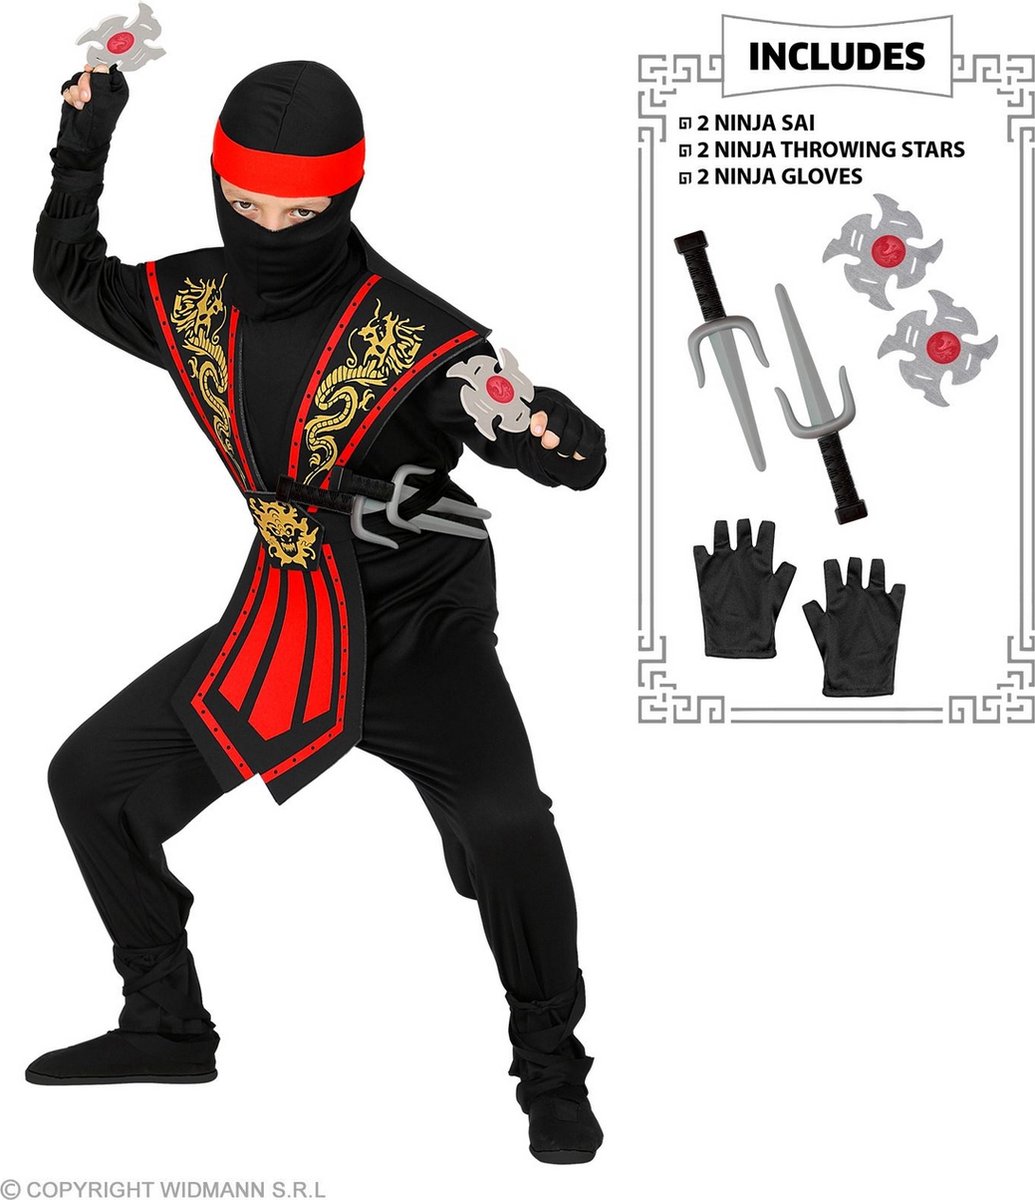 Widmann - Ninja & Samurai Kostuum - Vurige Draken Ninja Met Wapens Kind - Jongen - rood,zwart - Maat 158 - Carnavalskleding - Verkleedkleding